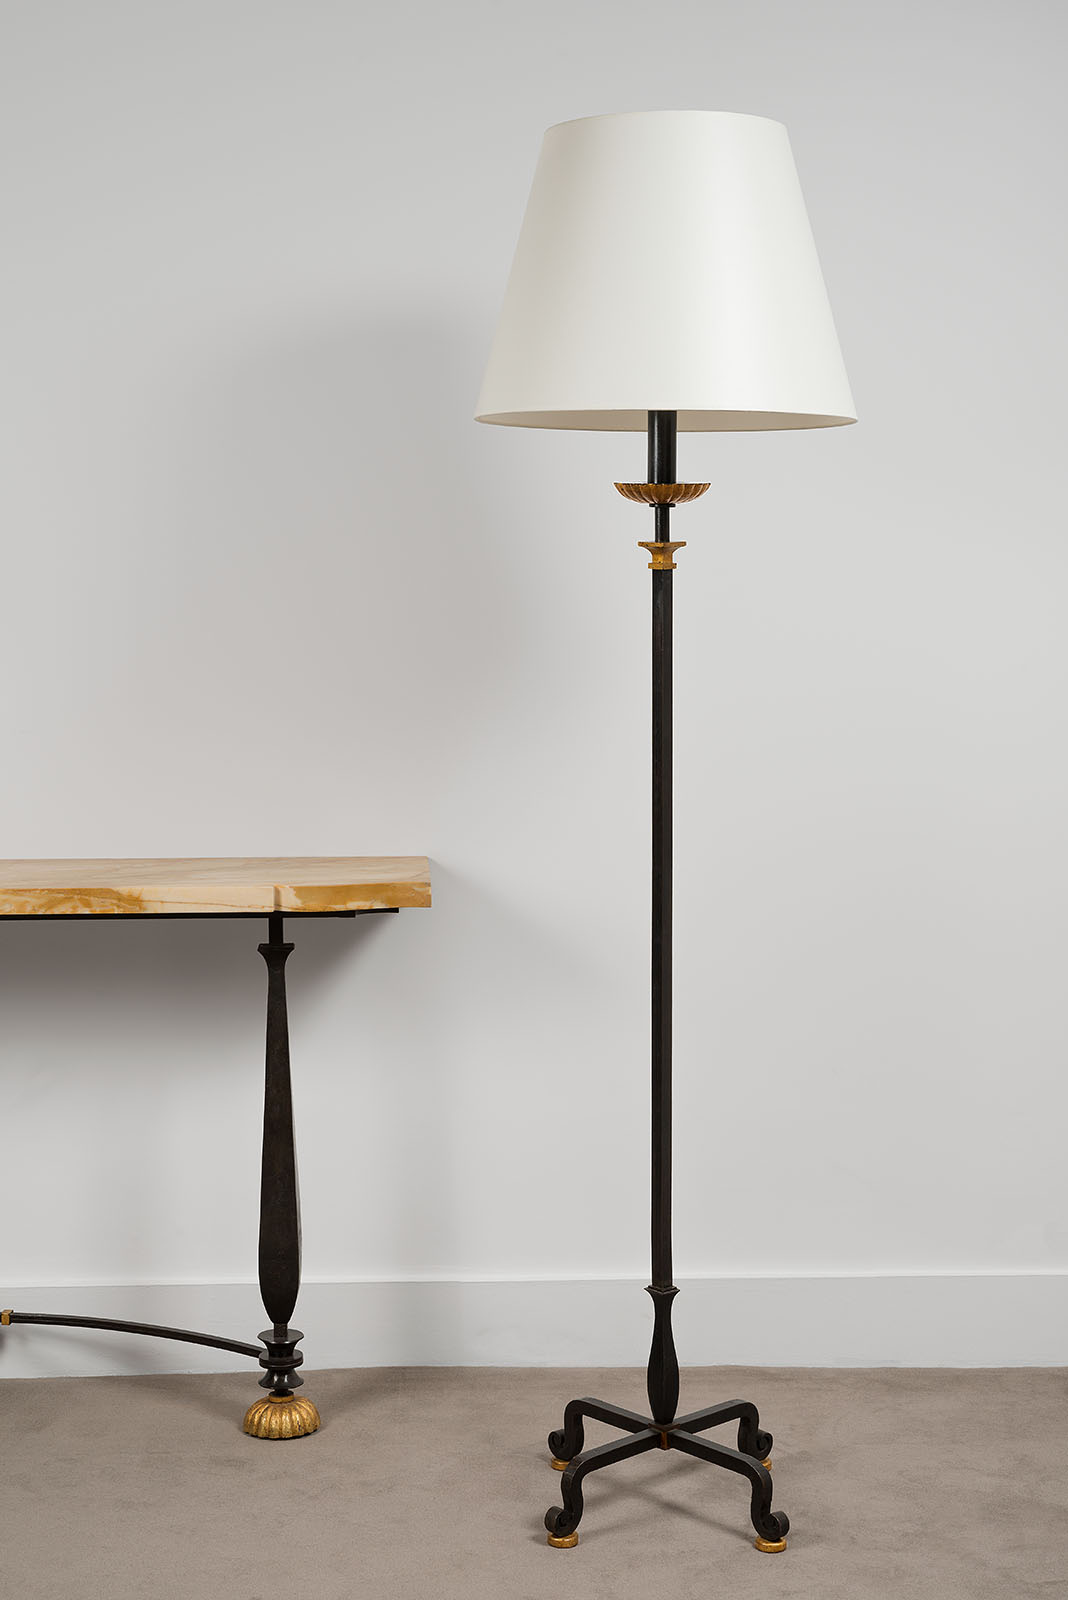 Gilbert Poillerat, Rare floor lamp (sold), vue 01